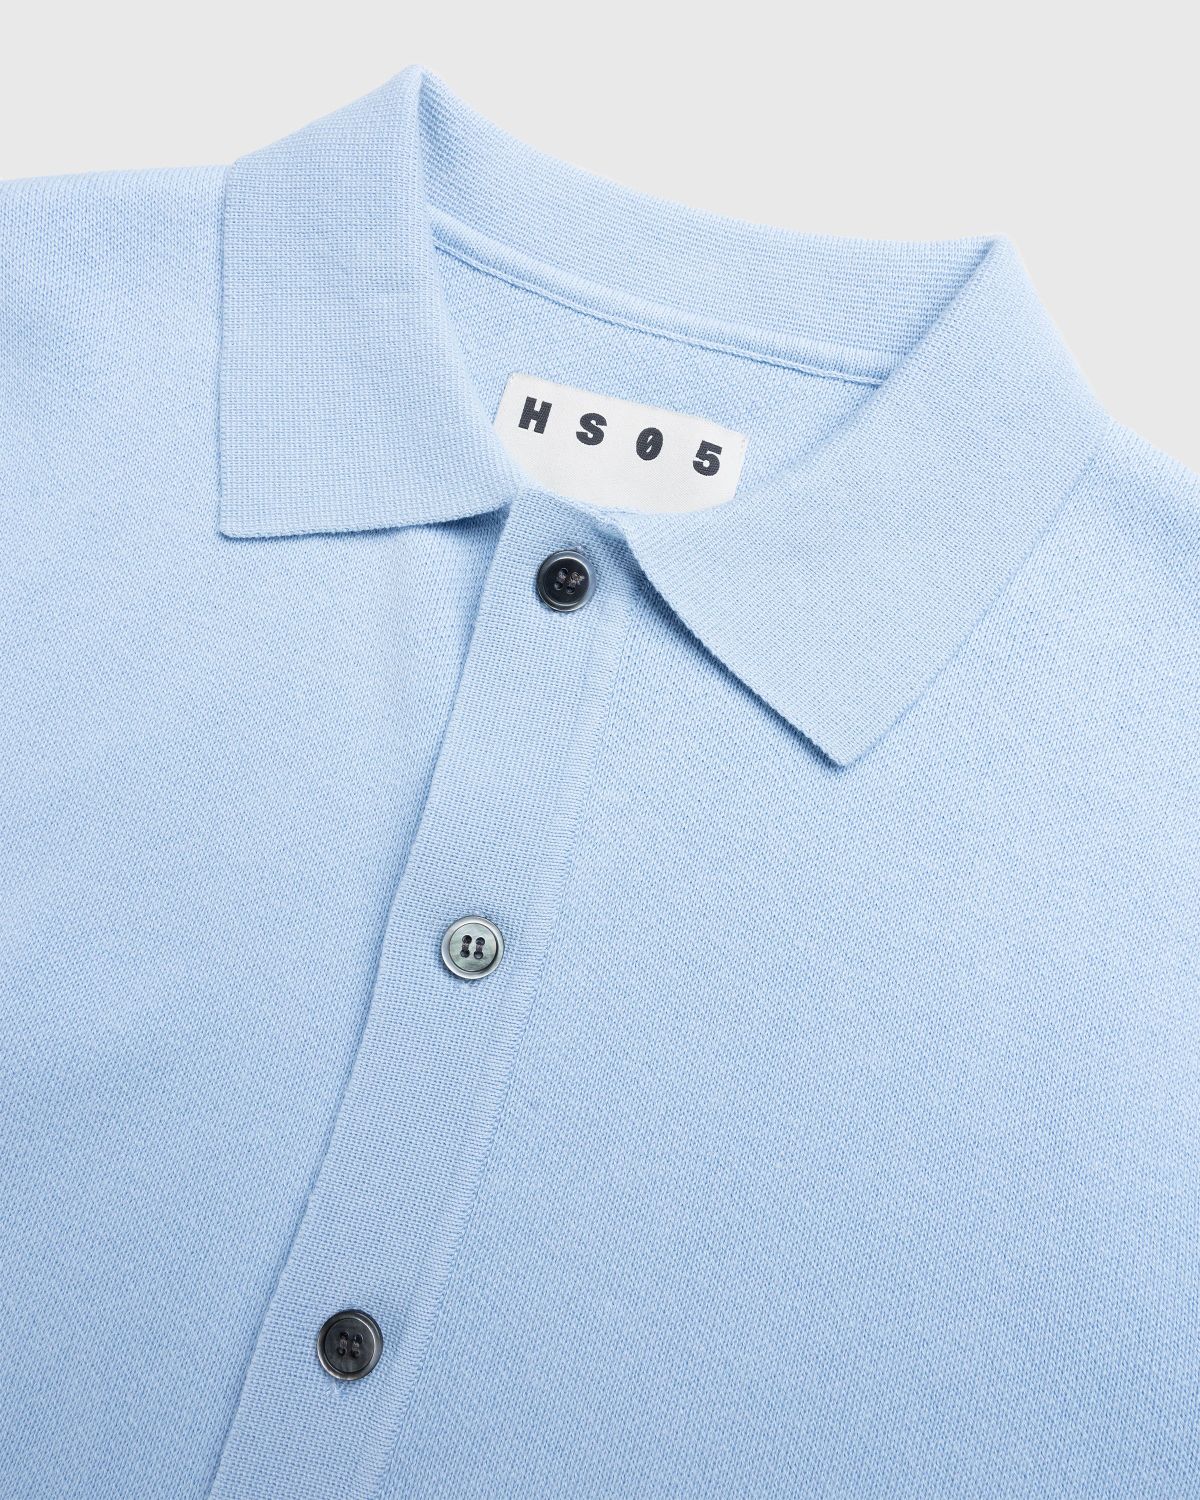 Highsnobiety HS05 – Cotton Knit Shirt Light blue - Shirts - Blue - Image 6